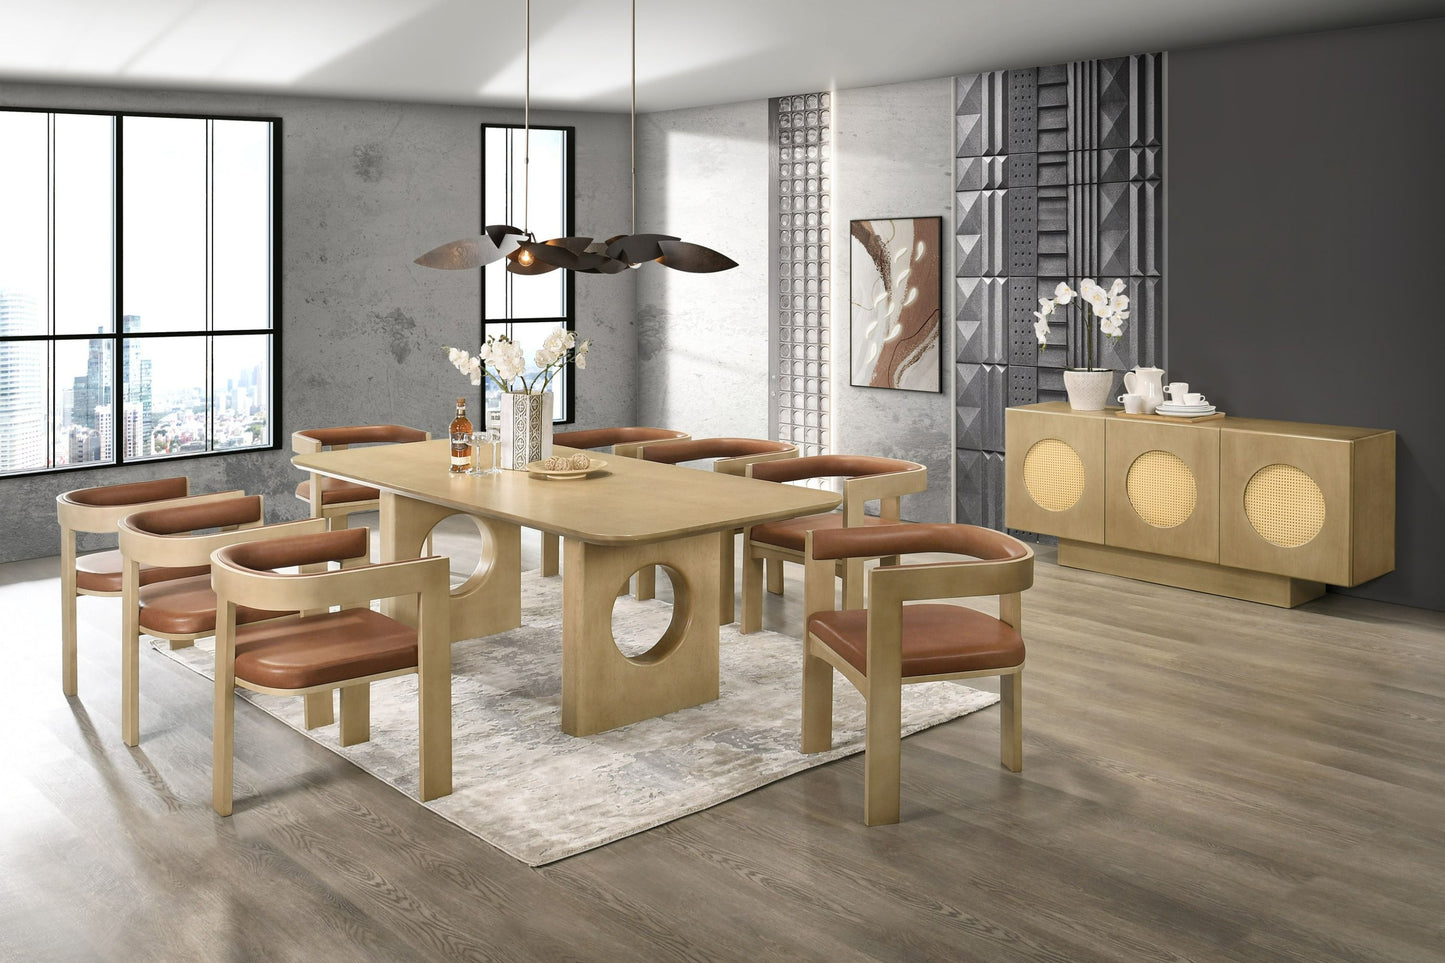 Nova Domus Oshana - Modern Rust Leatherette + White Oak Dining Chair